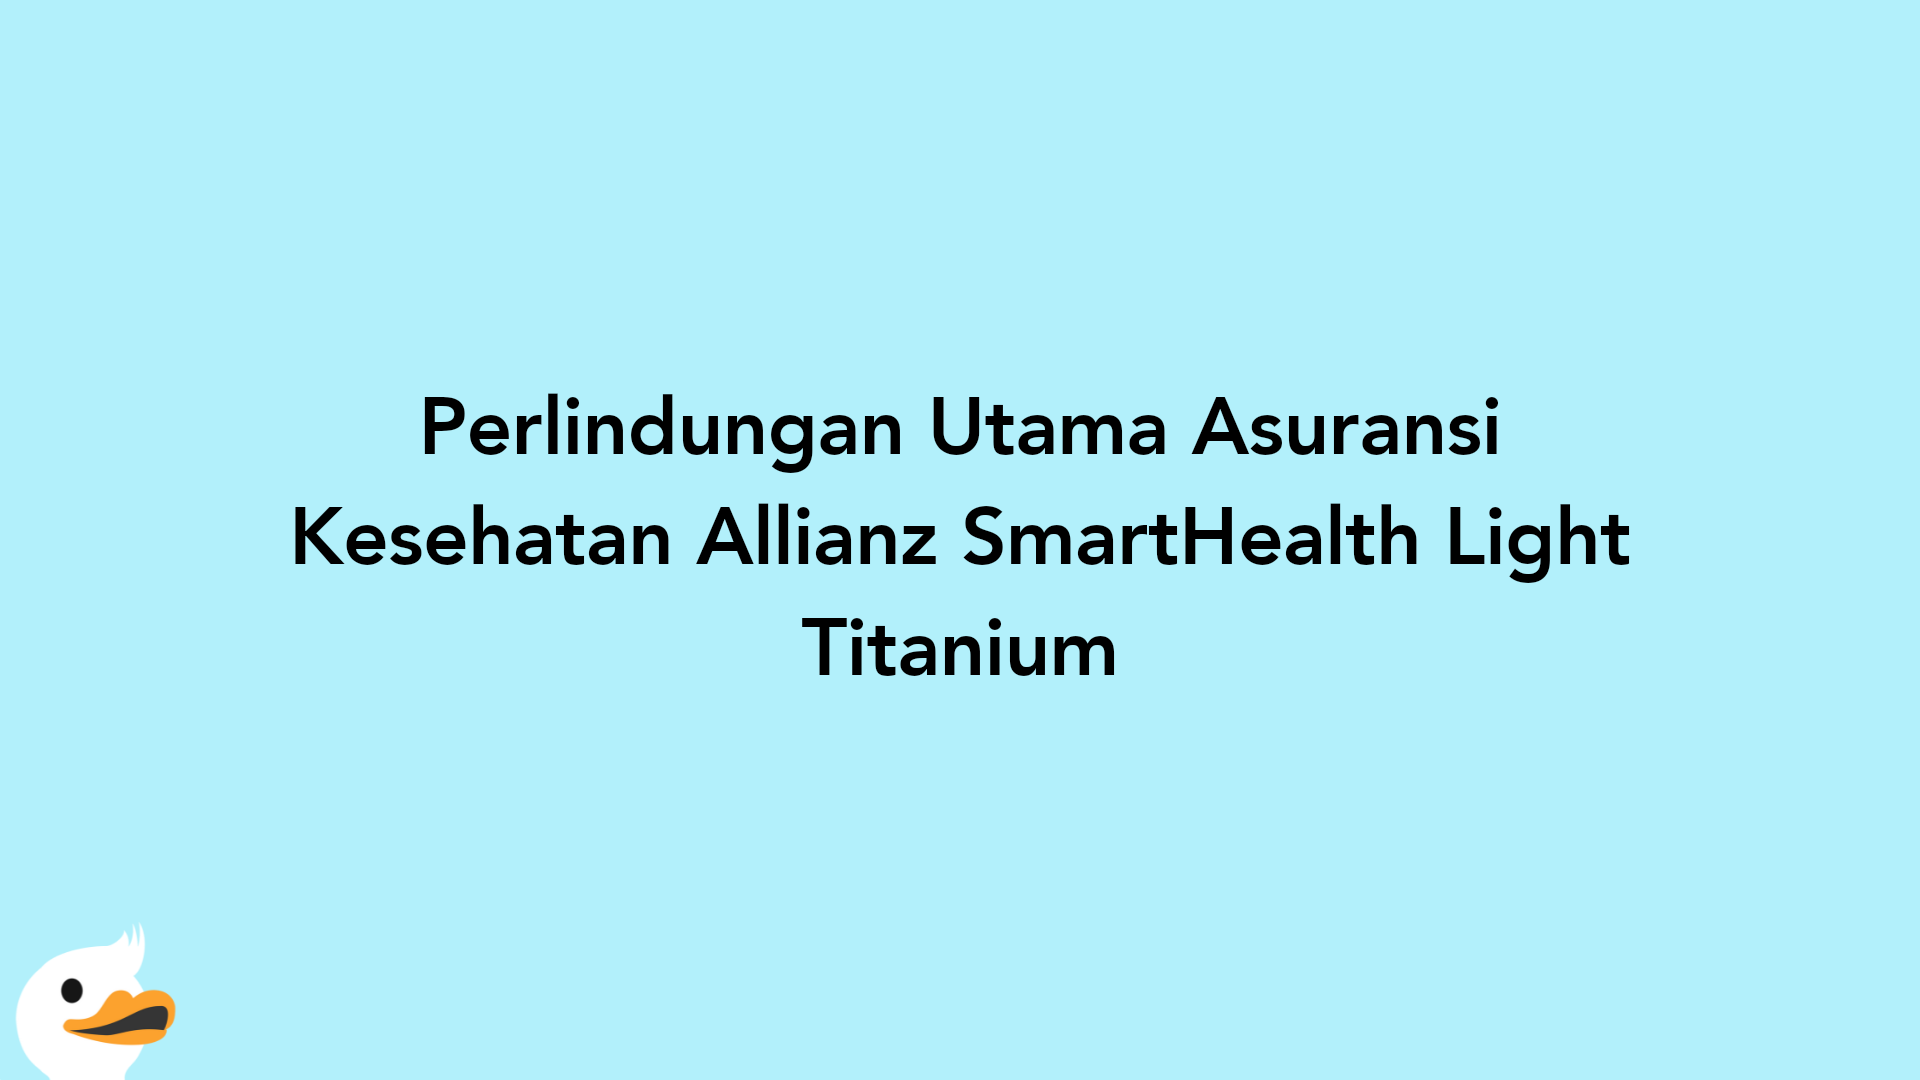 Perlindungan Utama Asuransi Kesehatan Allianz SmartHealth Light Titanium